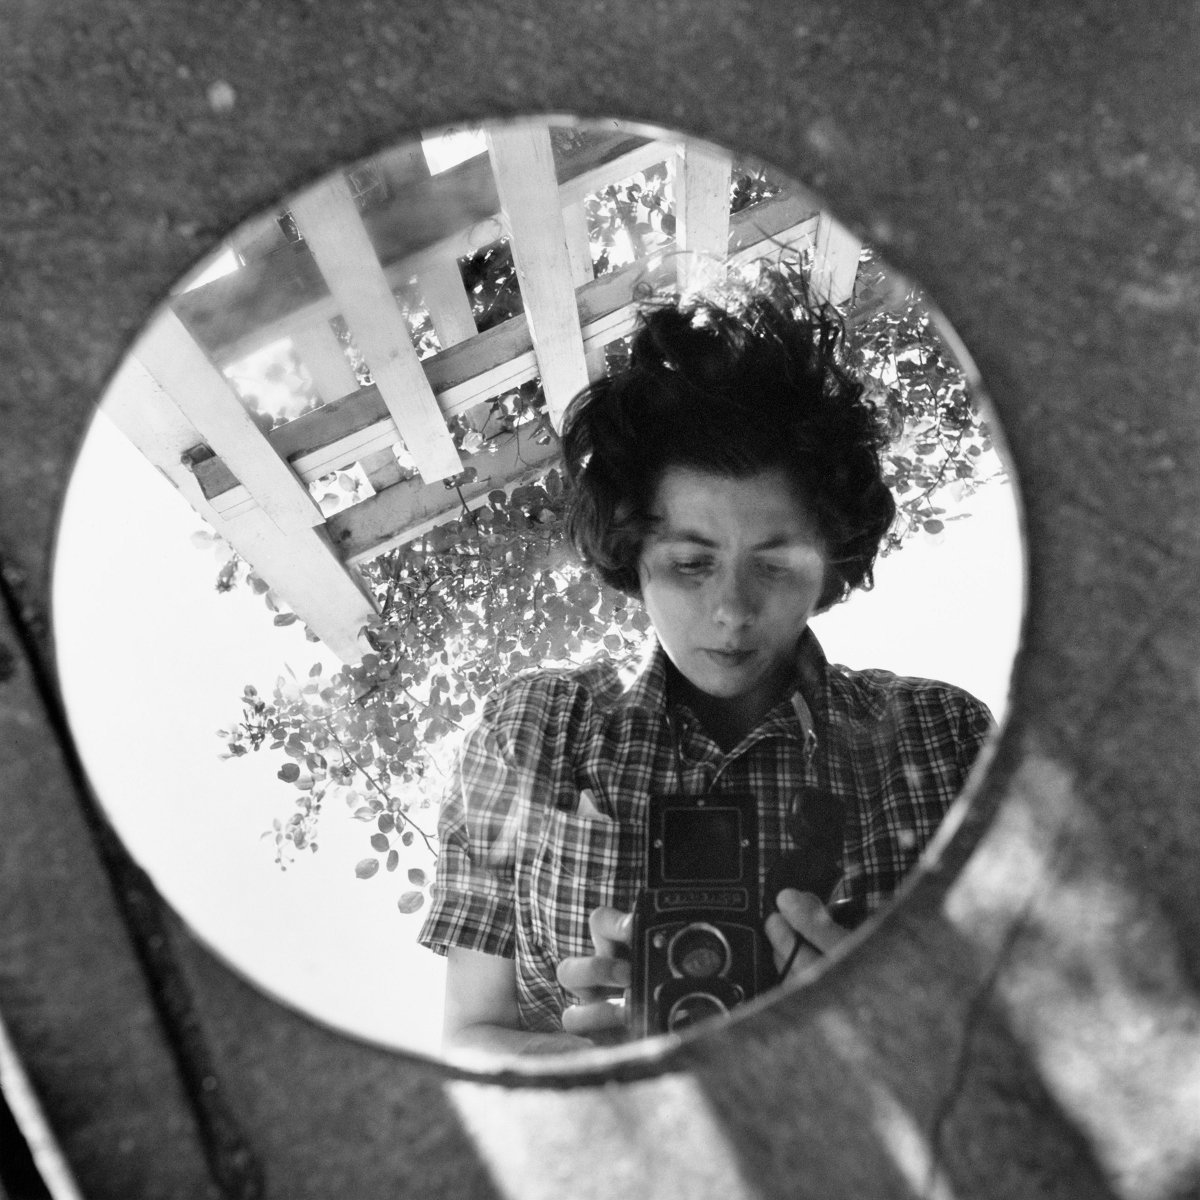 Vivian Maier - The Self-Portrait and its Double